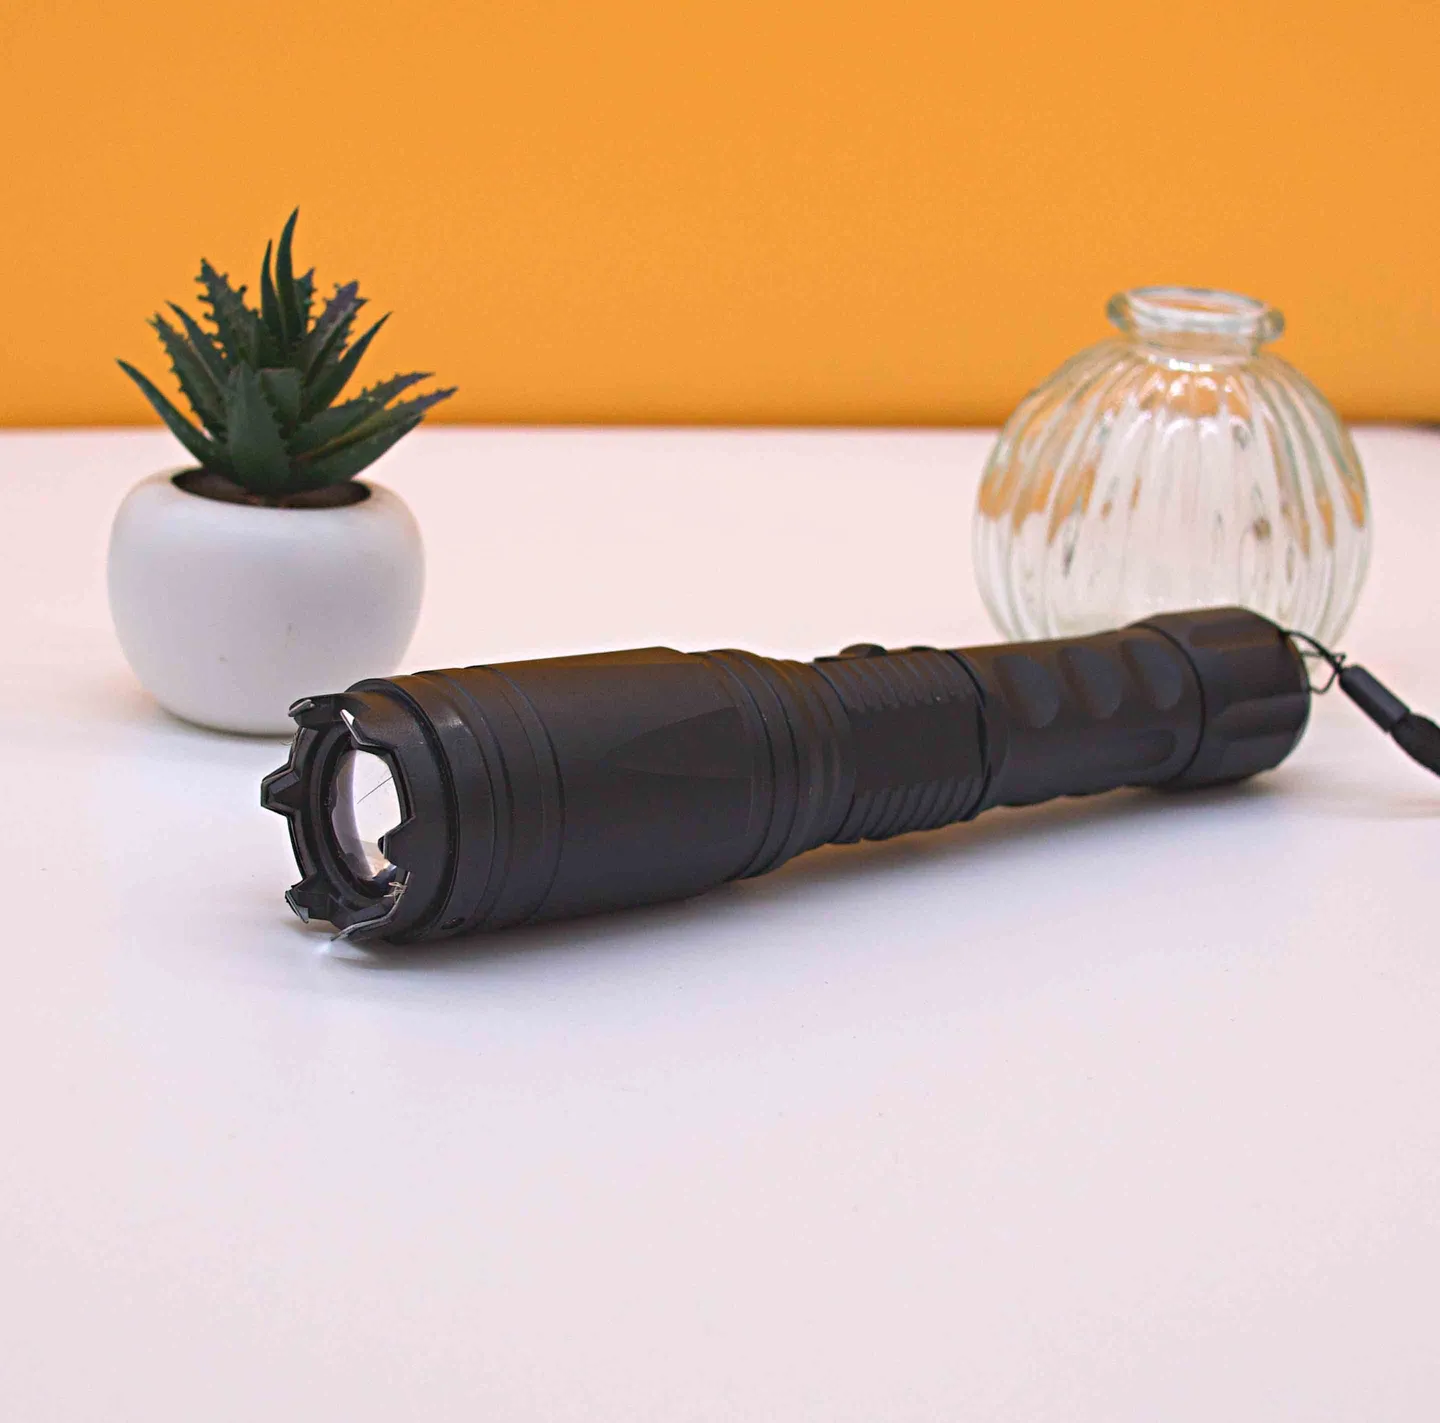 Shocker & Taser - Shocker Taser lampe Zoomable et brise vitre de 8 000 000 de volts